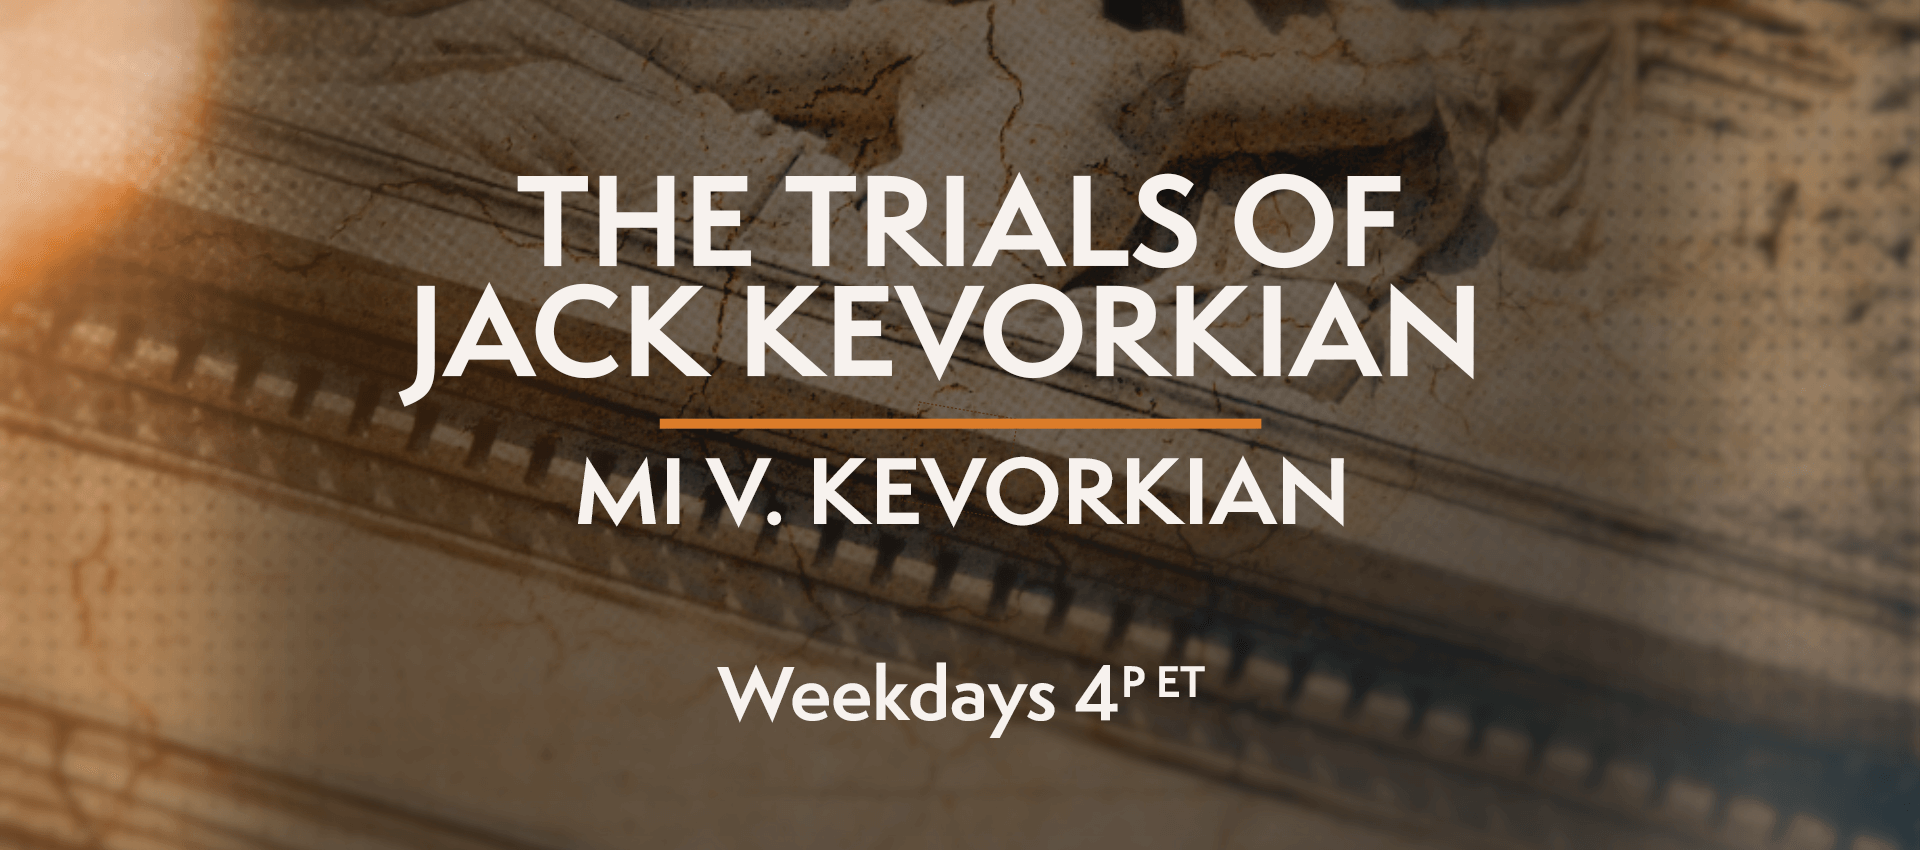 Jack Kevorkian Legendary Trials Graphic